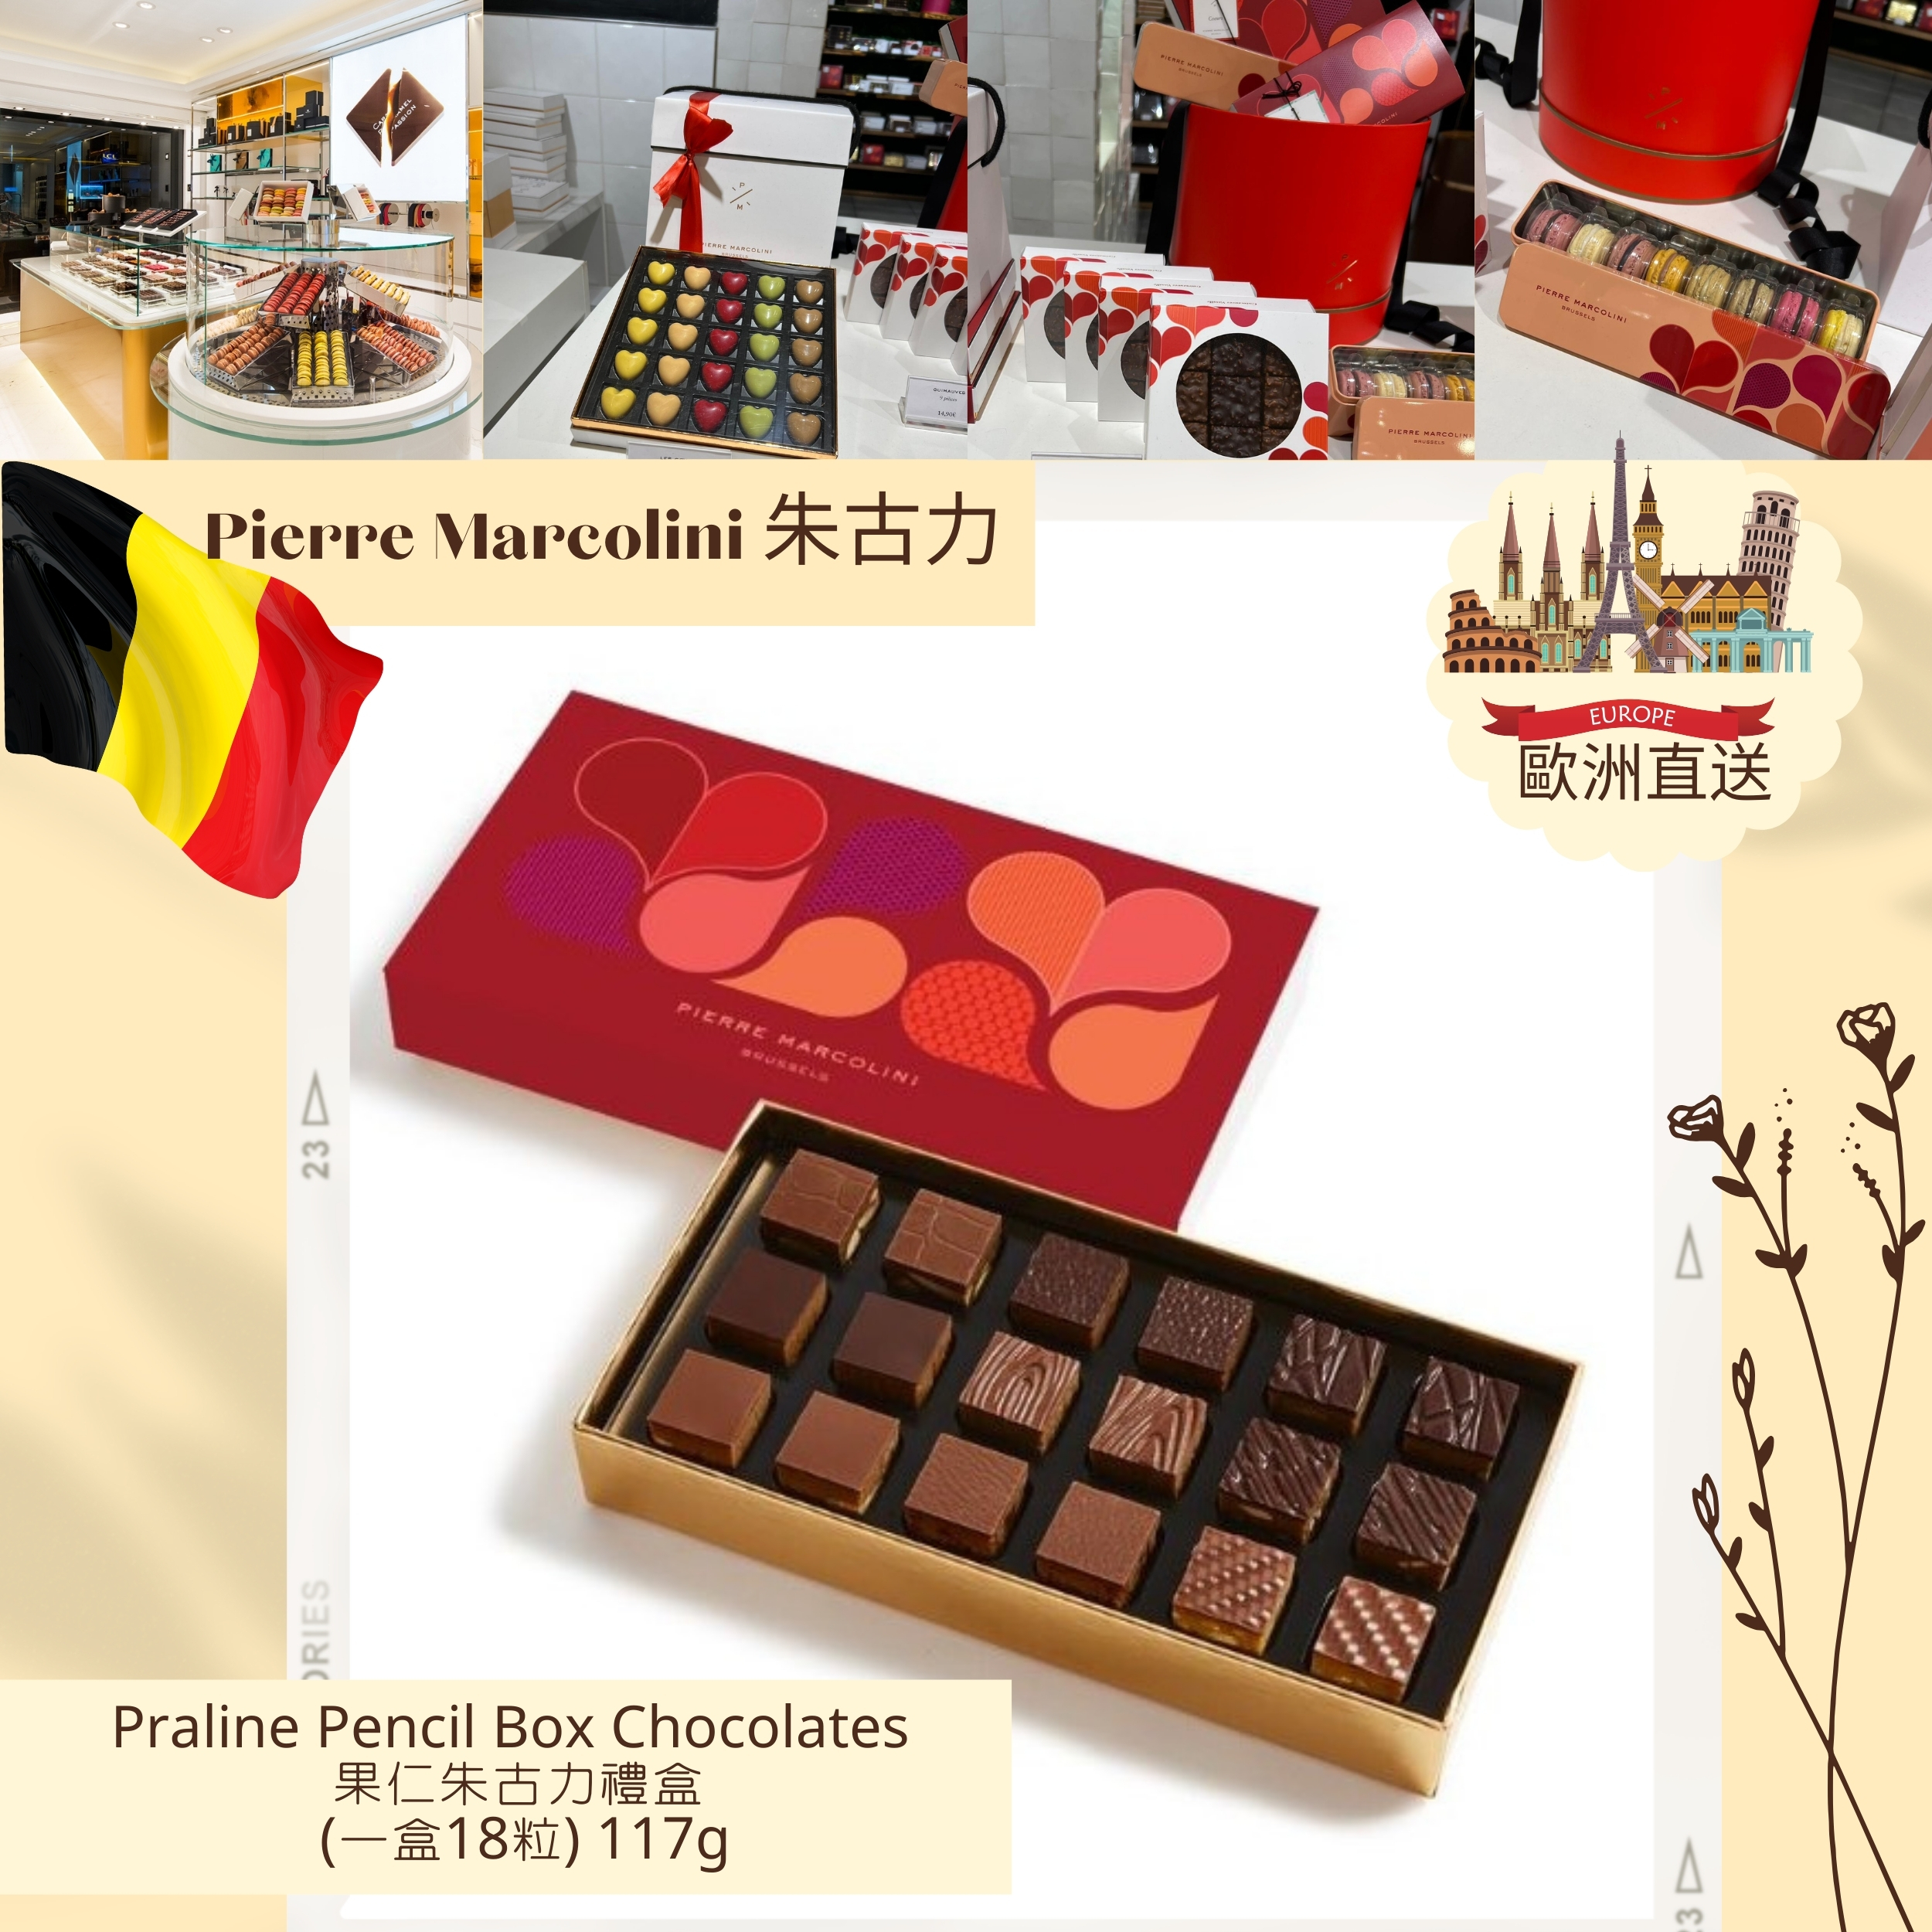 Pierre Marcolini 比利時頂級朱古力品牌 - Praline Pencil Box Chocolates  果仁朱古力禮盒    (一盒18粒) 117g   | 情人節限定  | 情人節用一盒朱古力分享愛